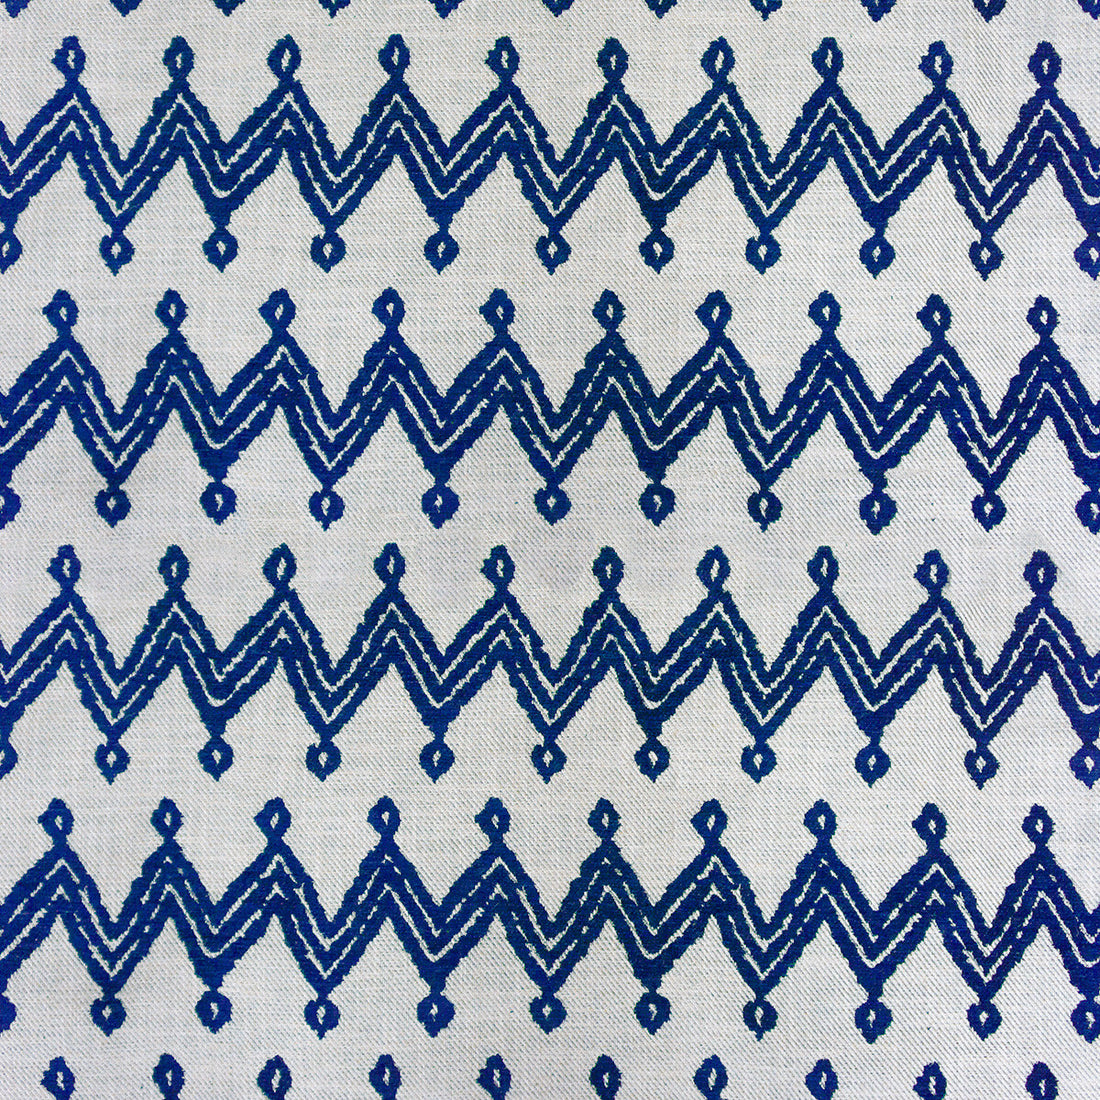 Navajo fabric in azul color - pattern GDT5653.003.0 - by Gaston y Daniela in the Gaston Rio Grande collection